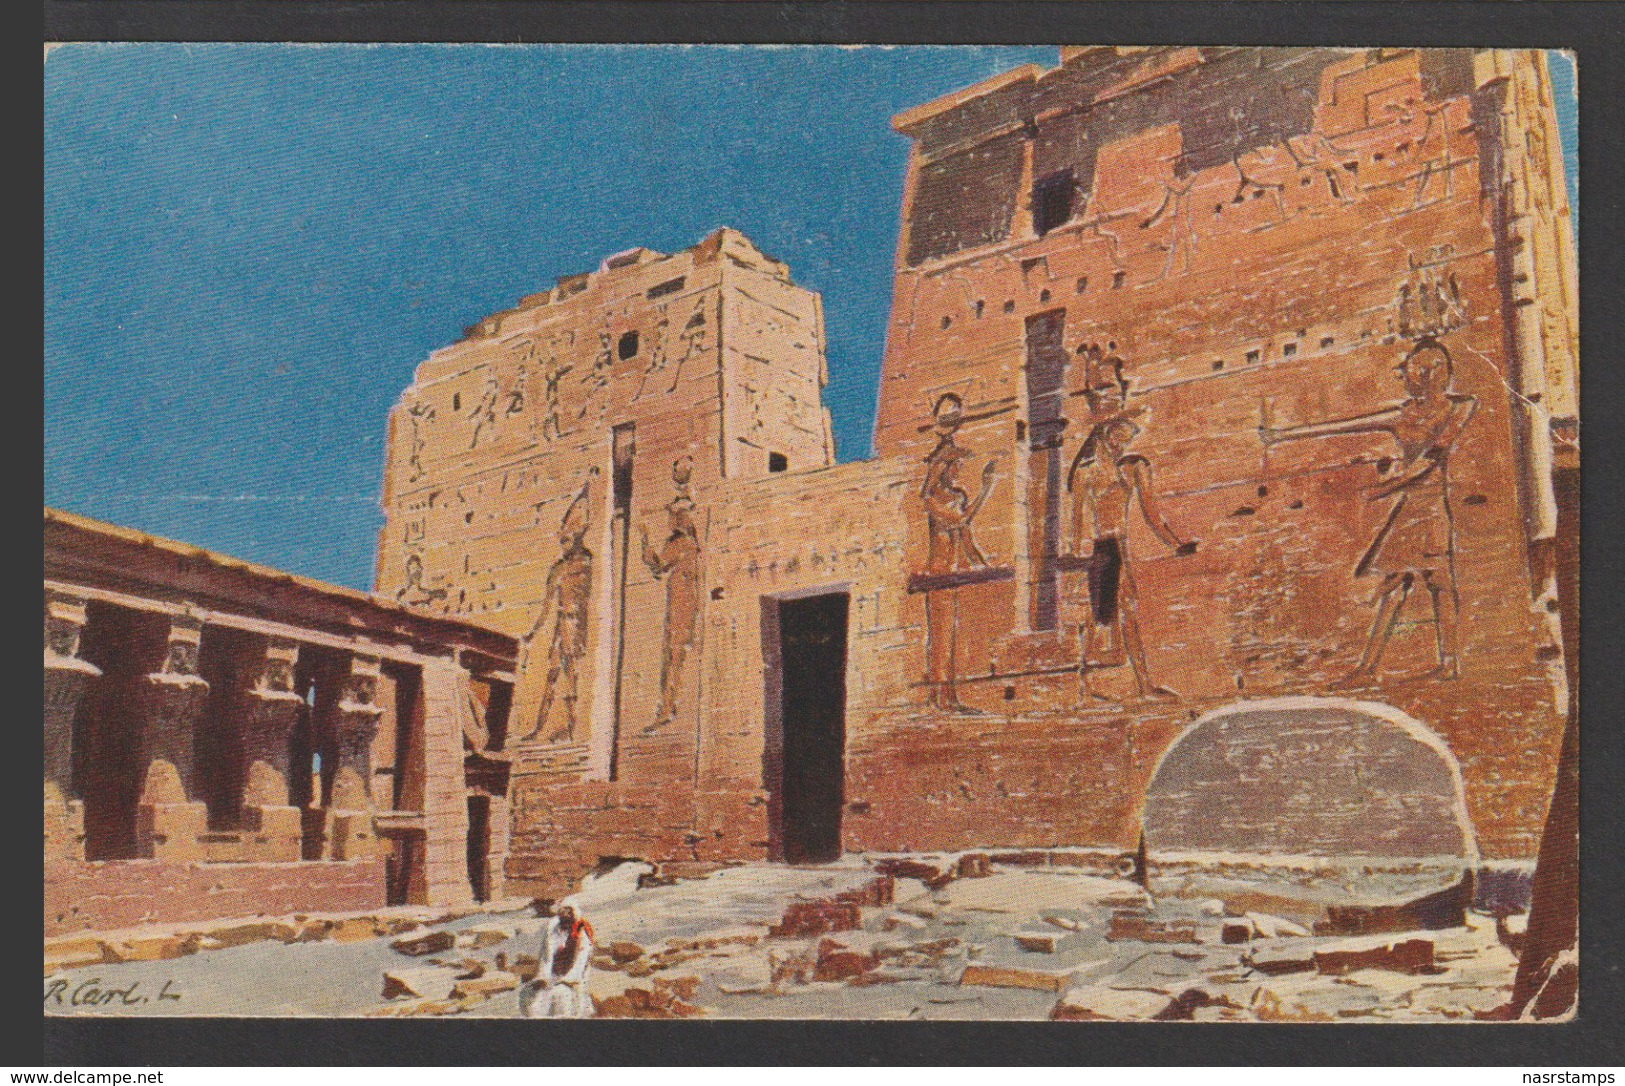 Egypt - RARE - Vintage Post Card - Philae Temple - Briefe U. Dokumente